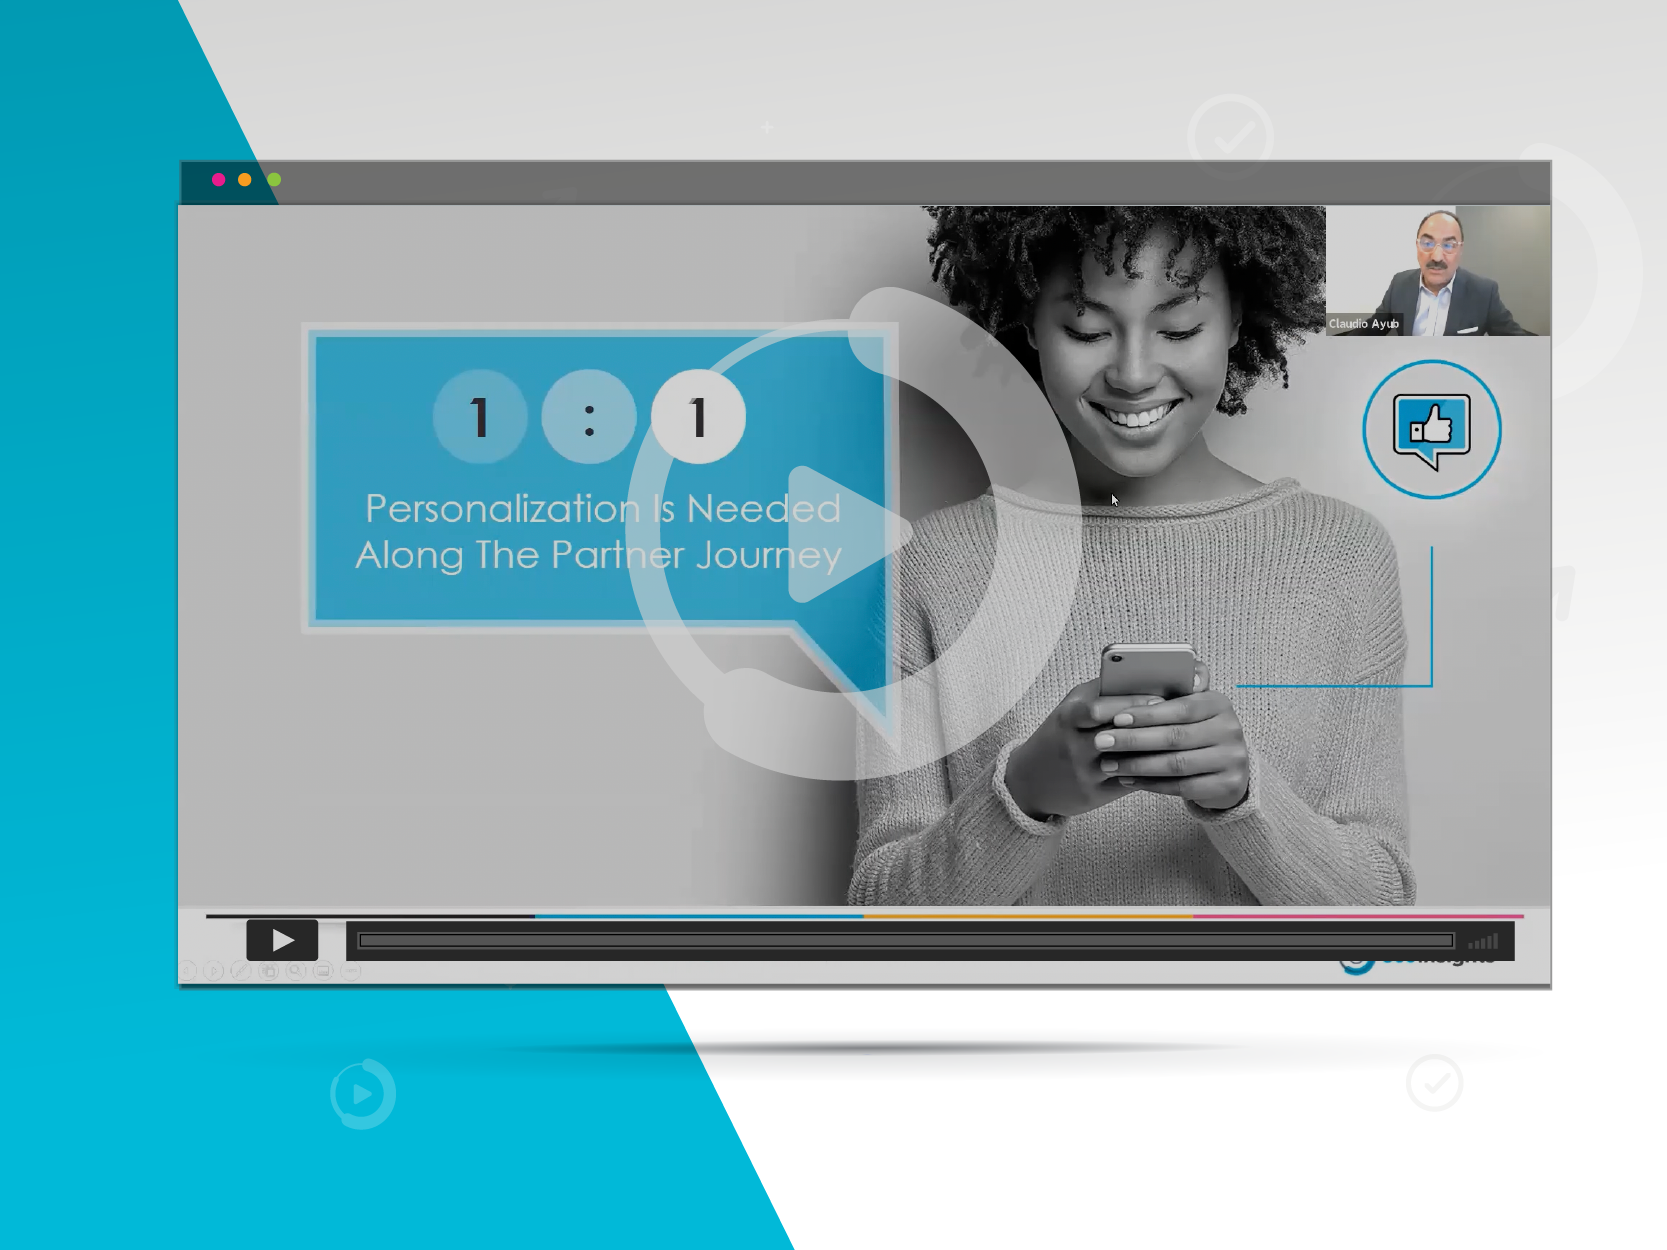 Videocast about optimizing partner engagement